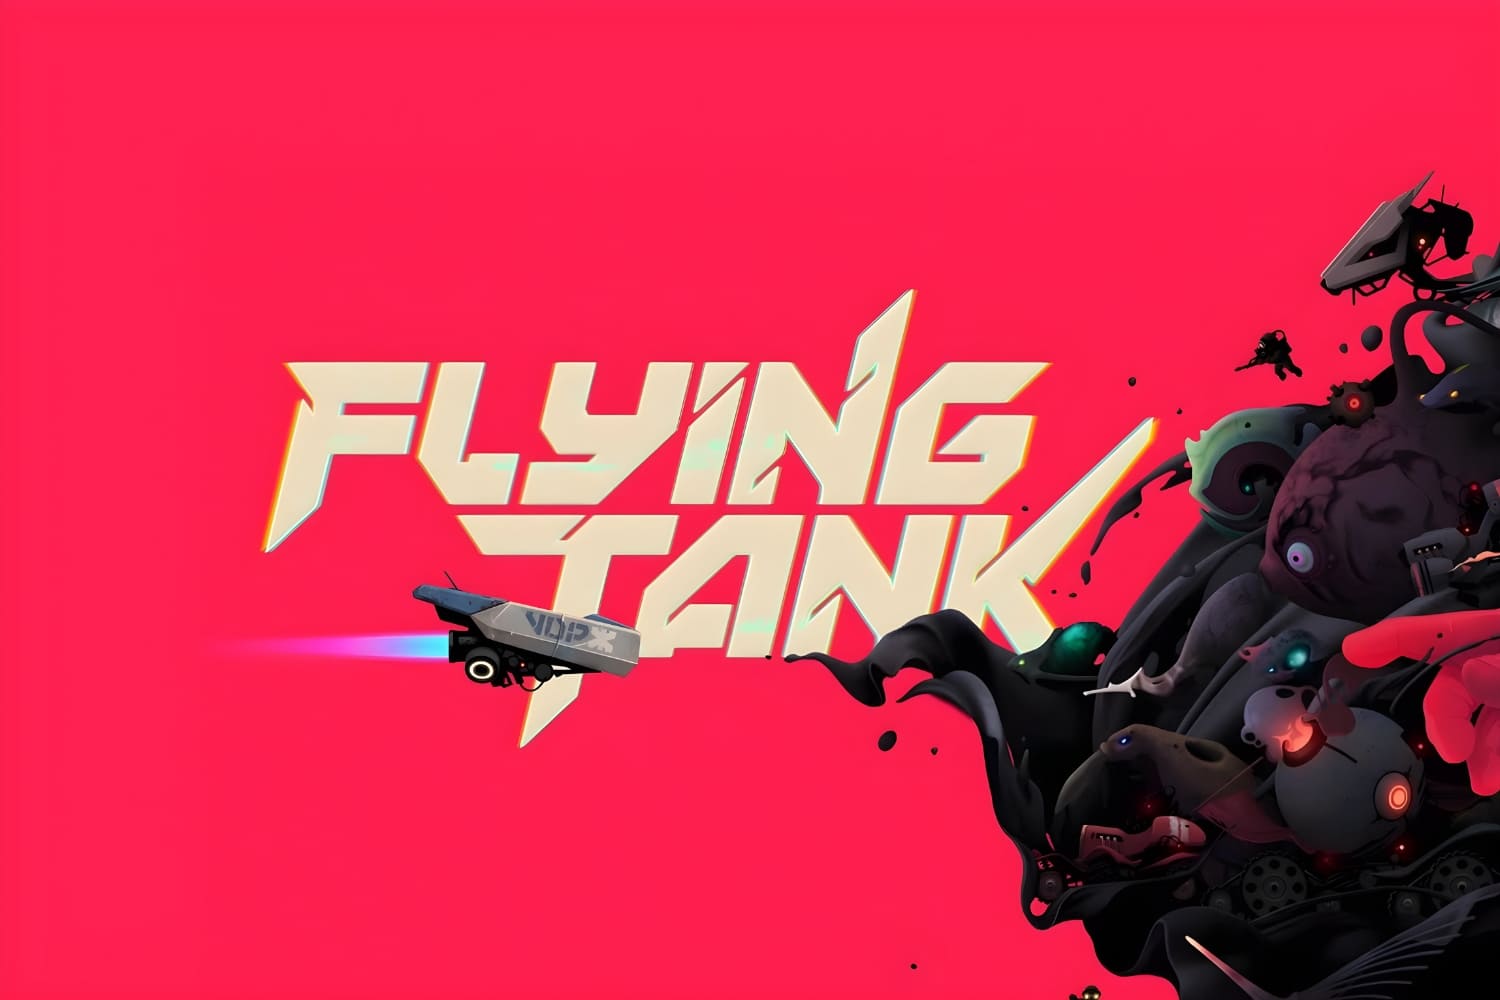 Flying tank